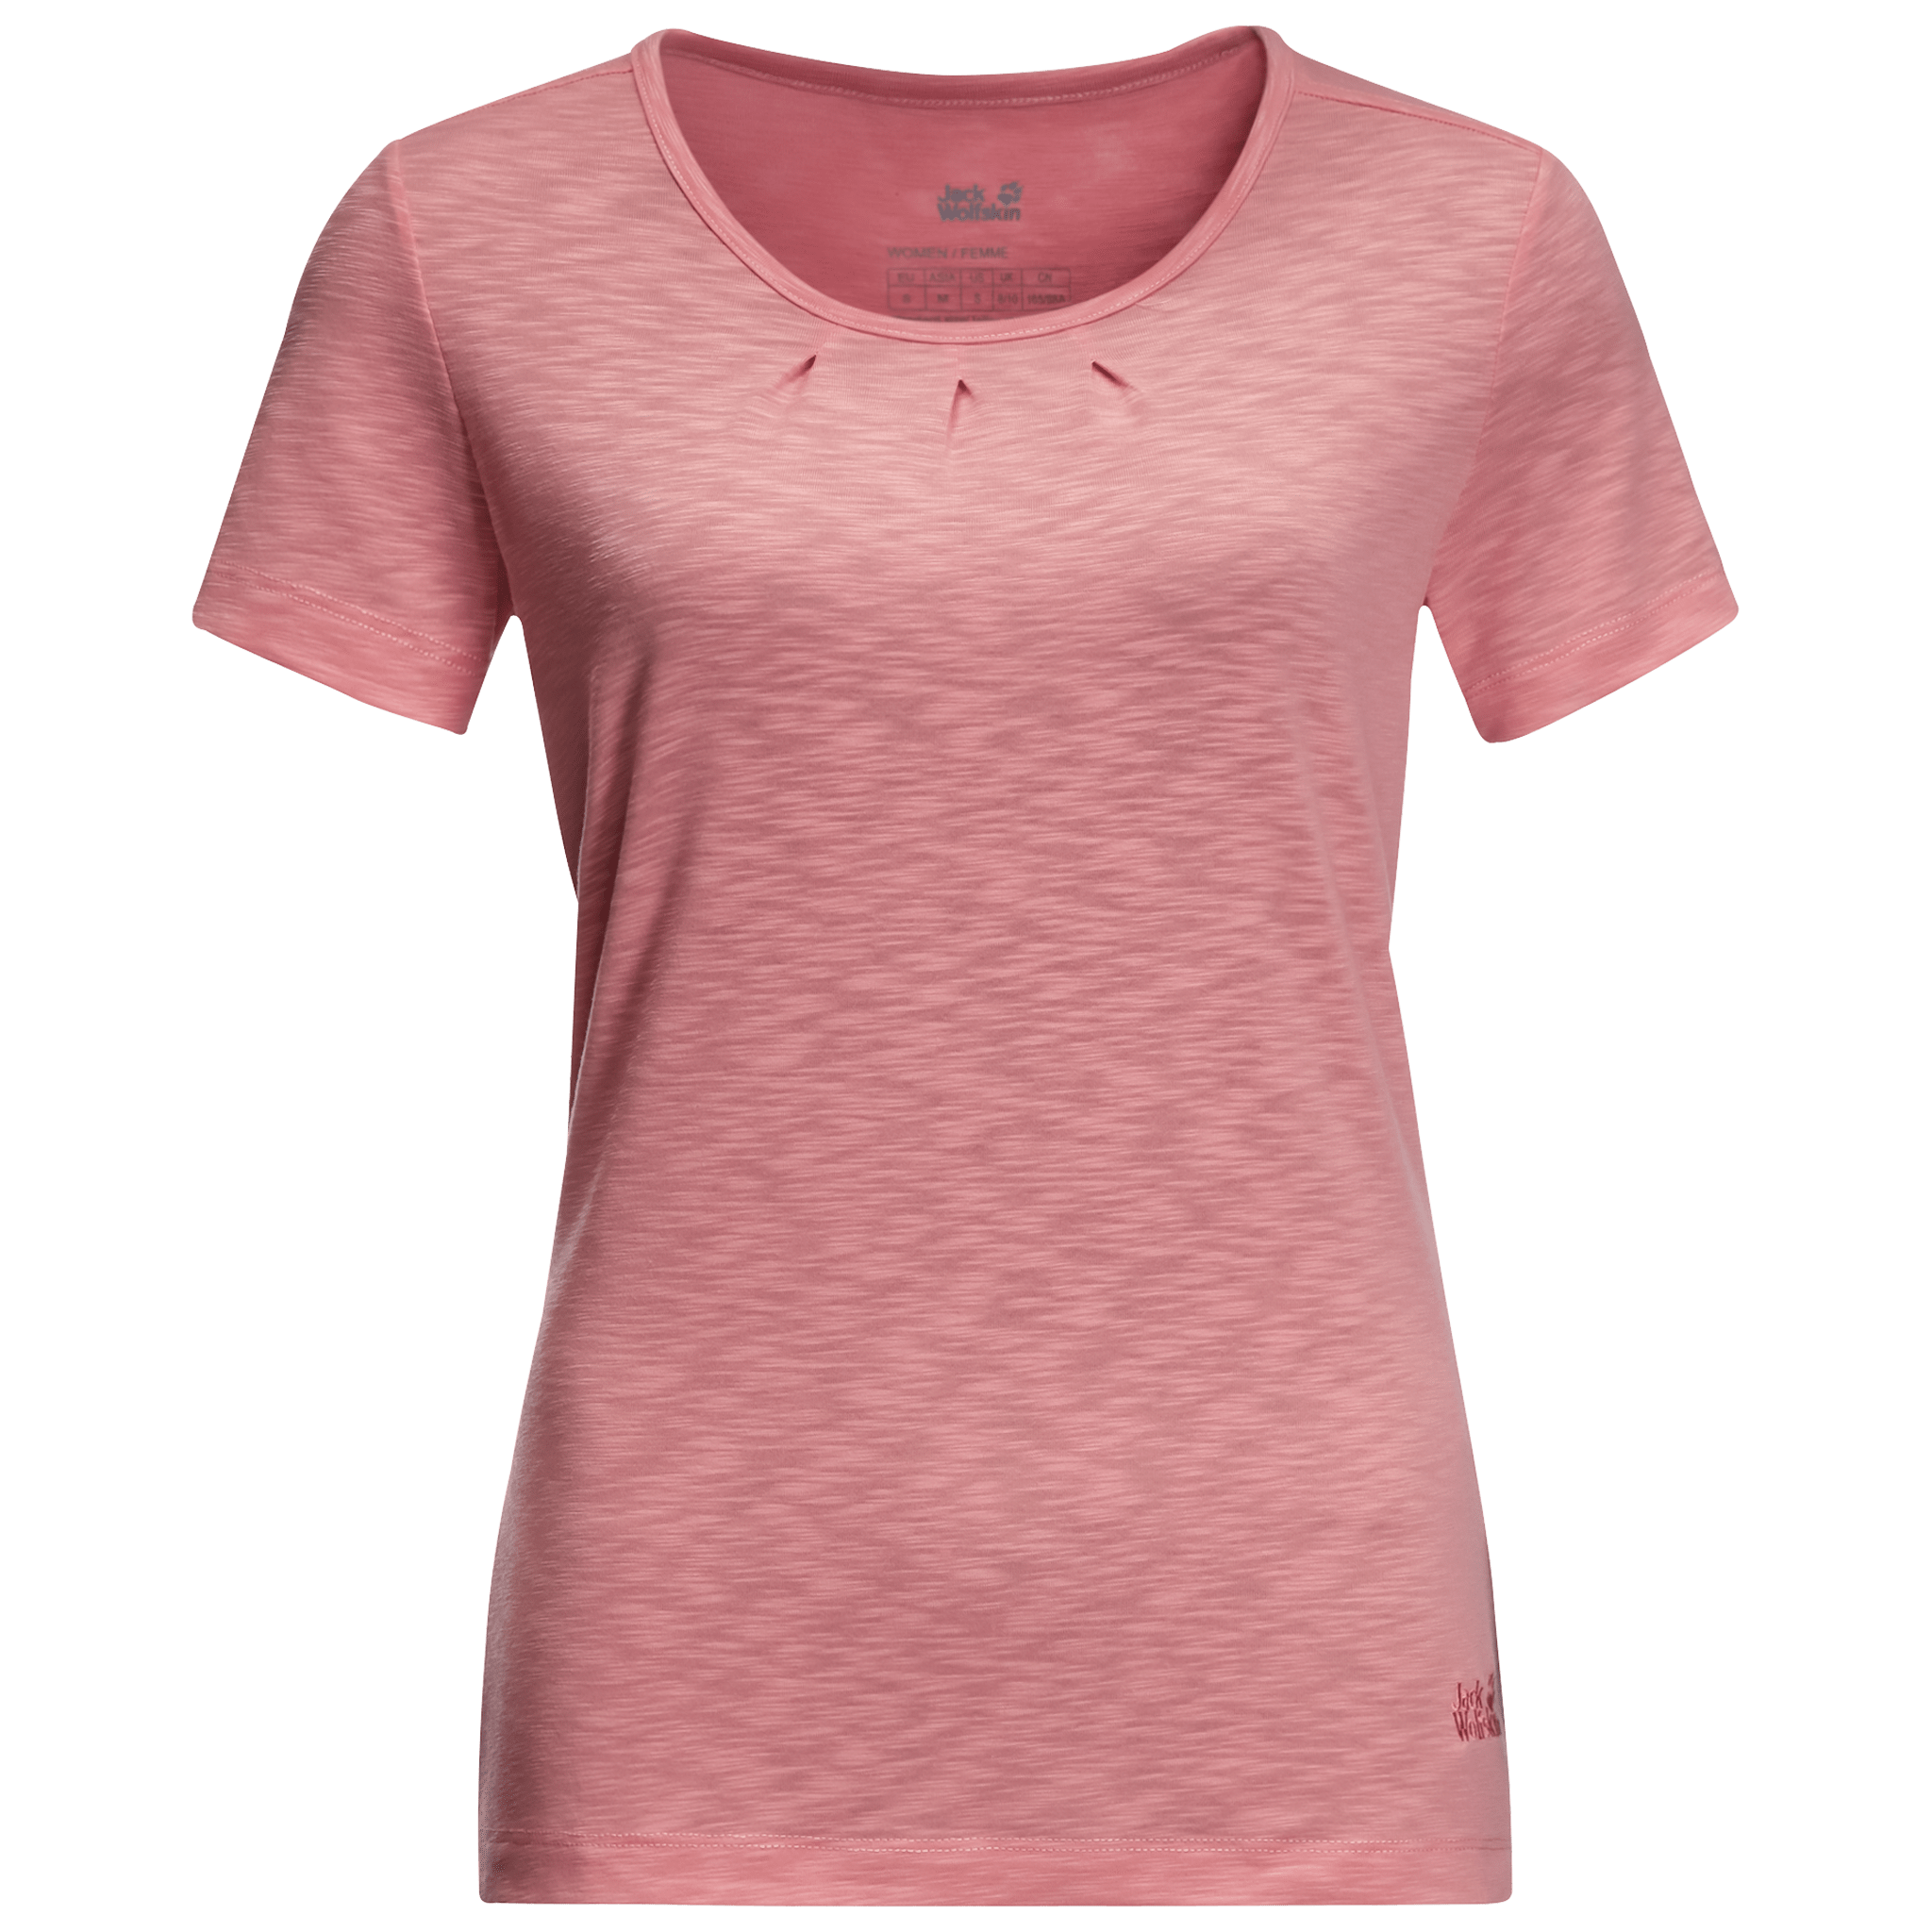 Rose Quartz Travel Shirt Women